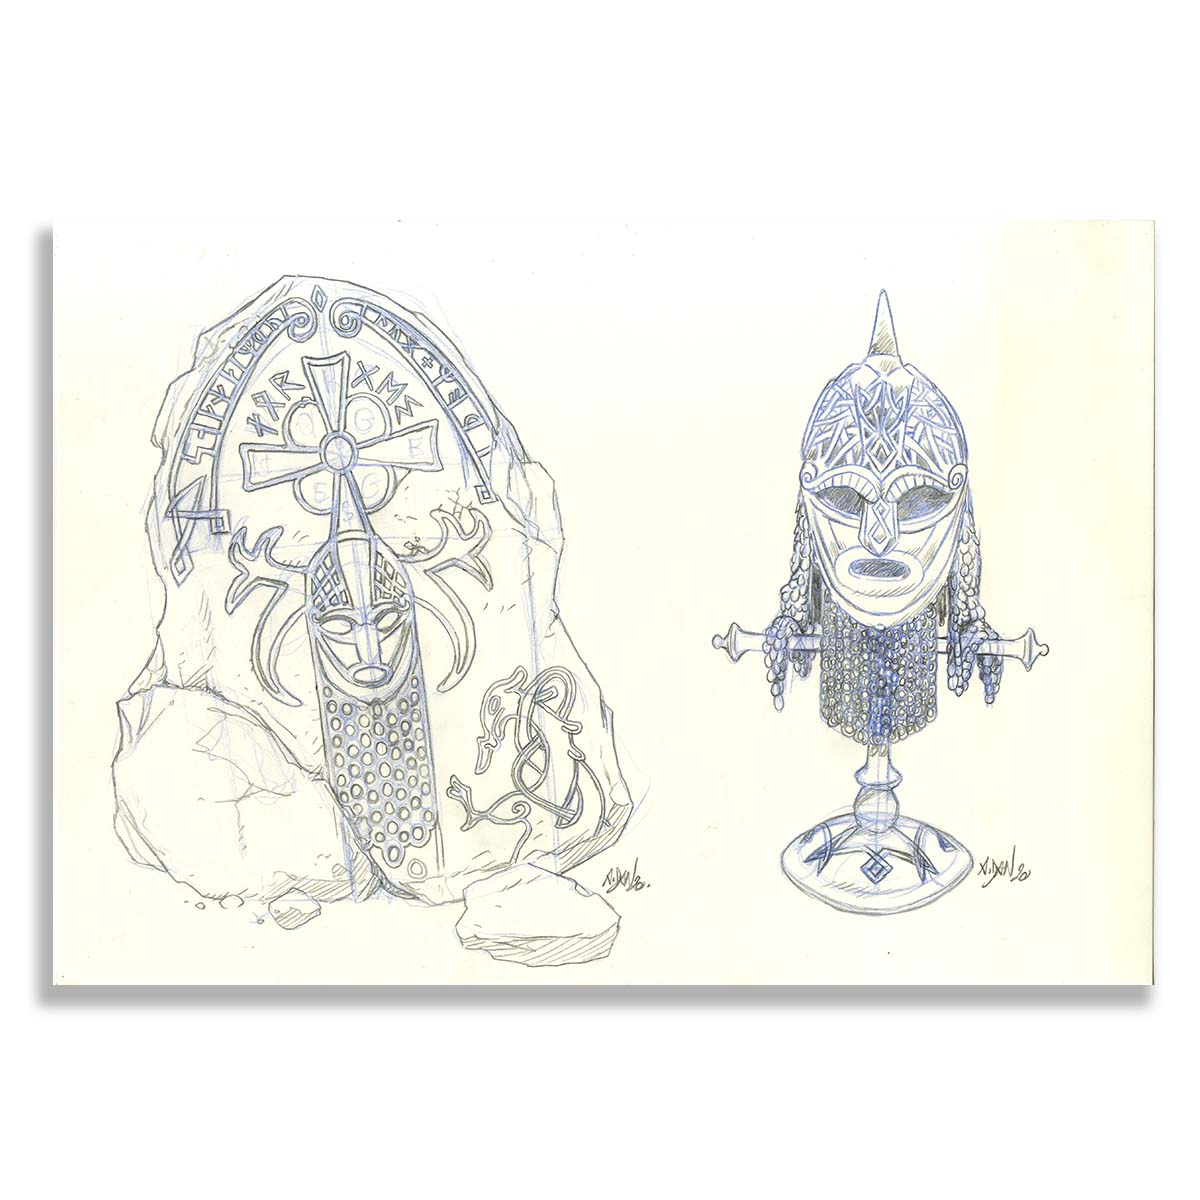 Original drawing from A.Dan, stele and viking helmet